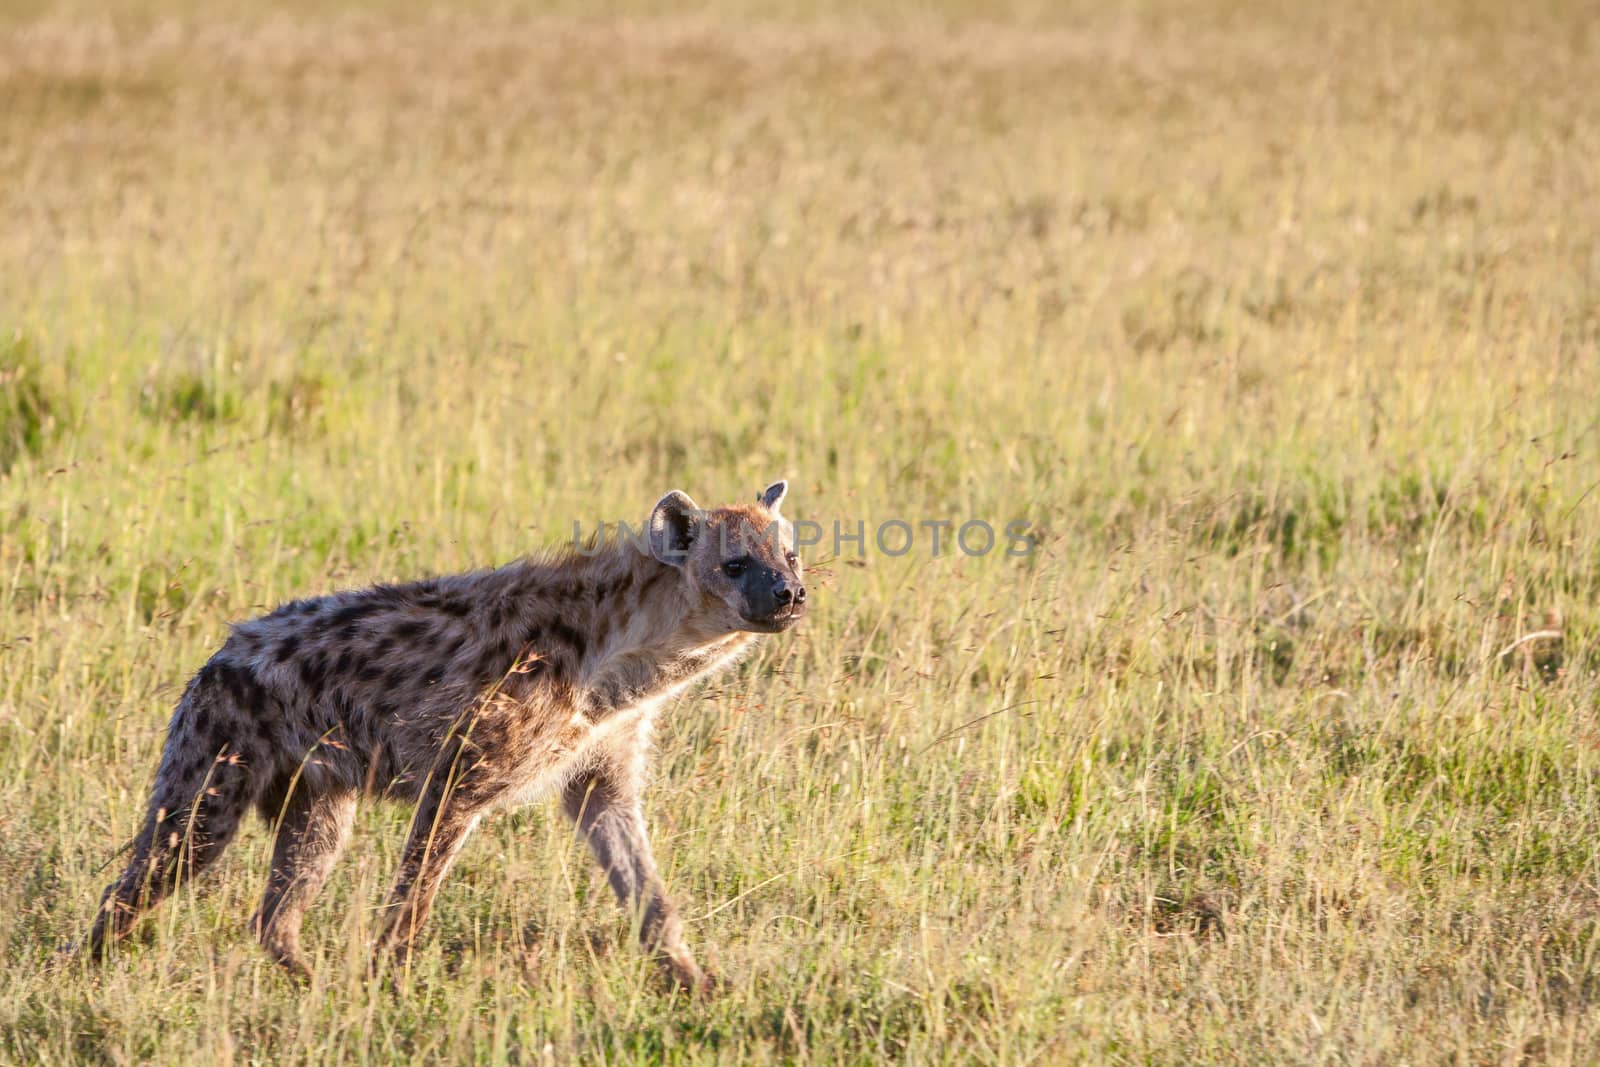 Hyena wandering the plains of Kenya by master1305